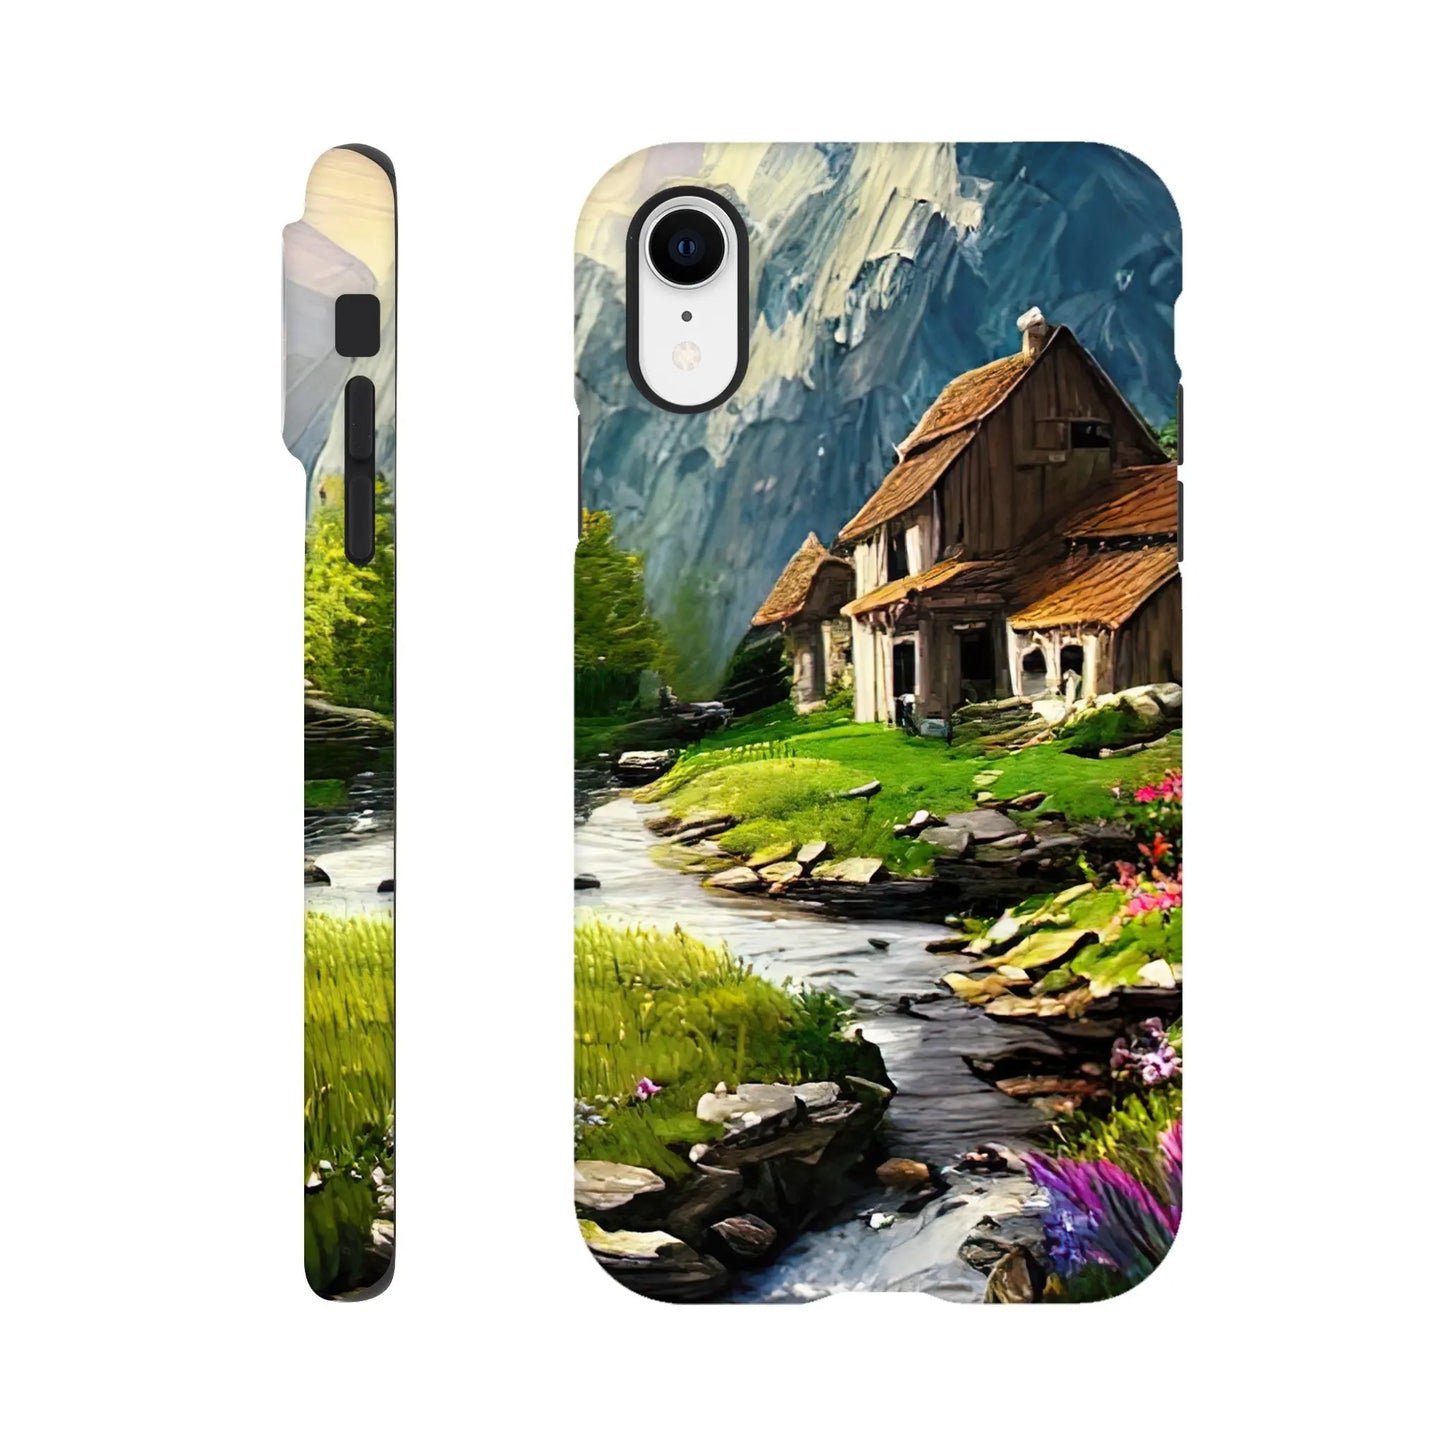 Smartphone-Hülle "Hart" - Berglandschaft - Malerischer Stil, KI-Kunst RolConArt, Landschaften, iPhone-XR